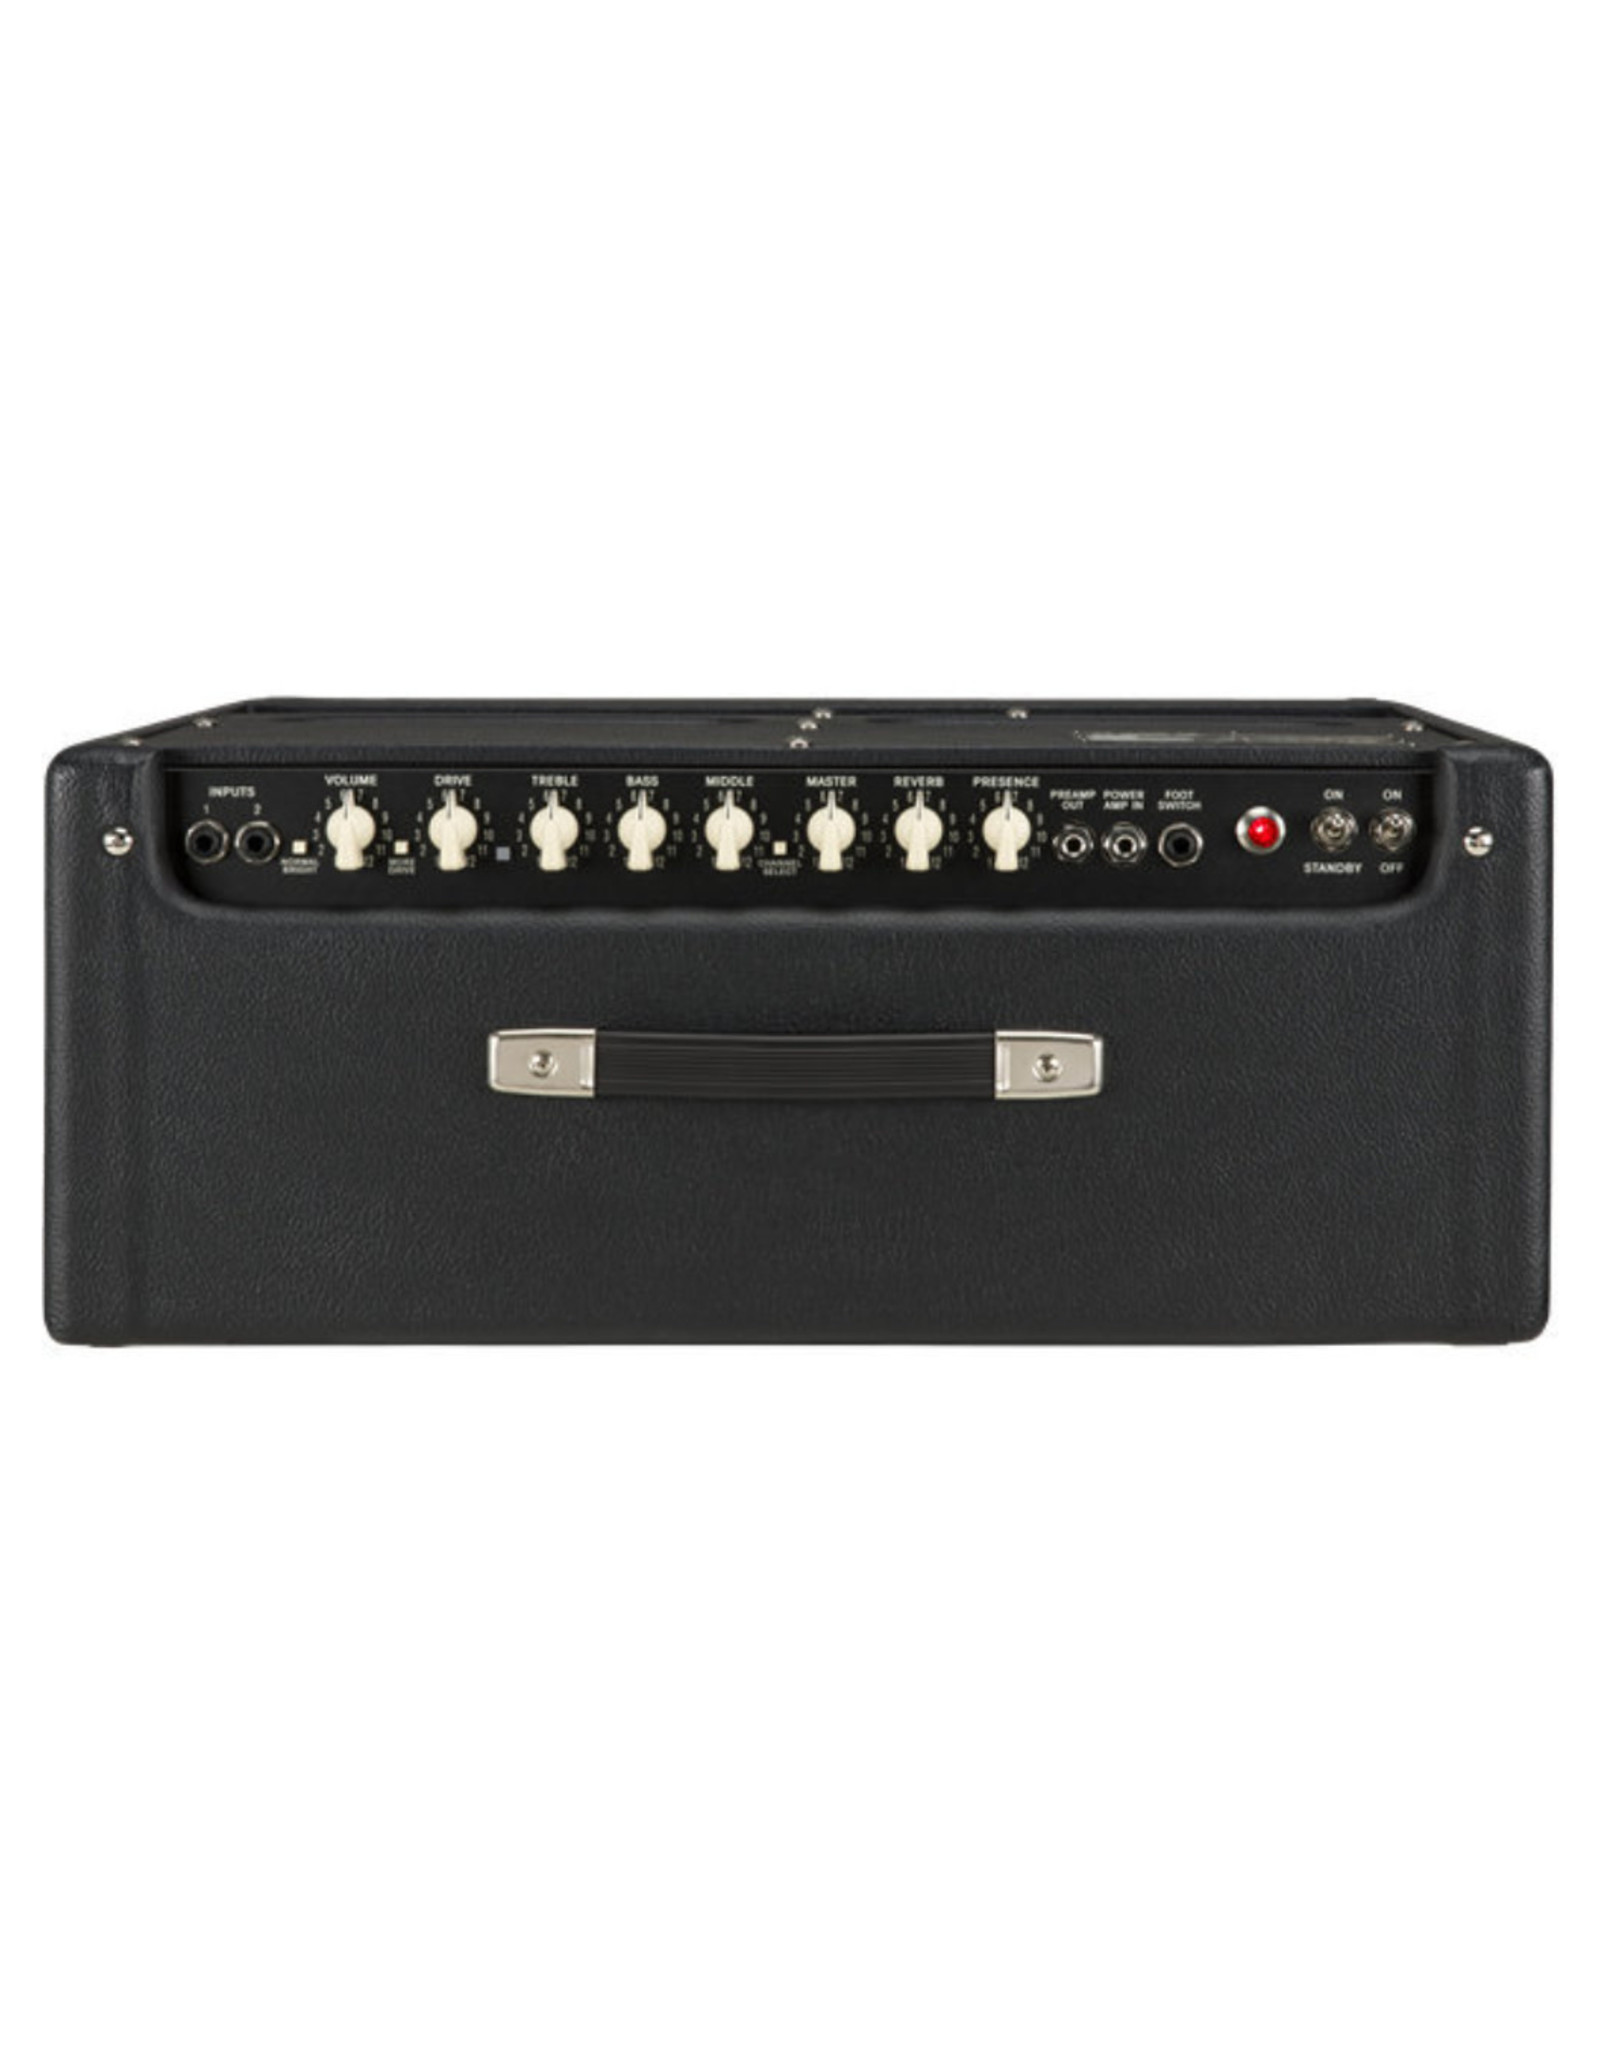 Fender Fender Hot Rod Deluxe IV Guitar Amplifier - Black (2231200000)